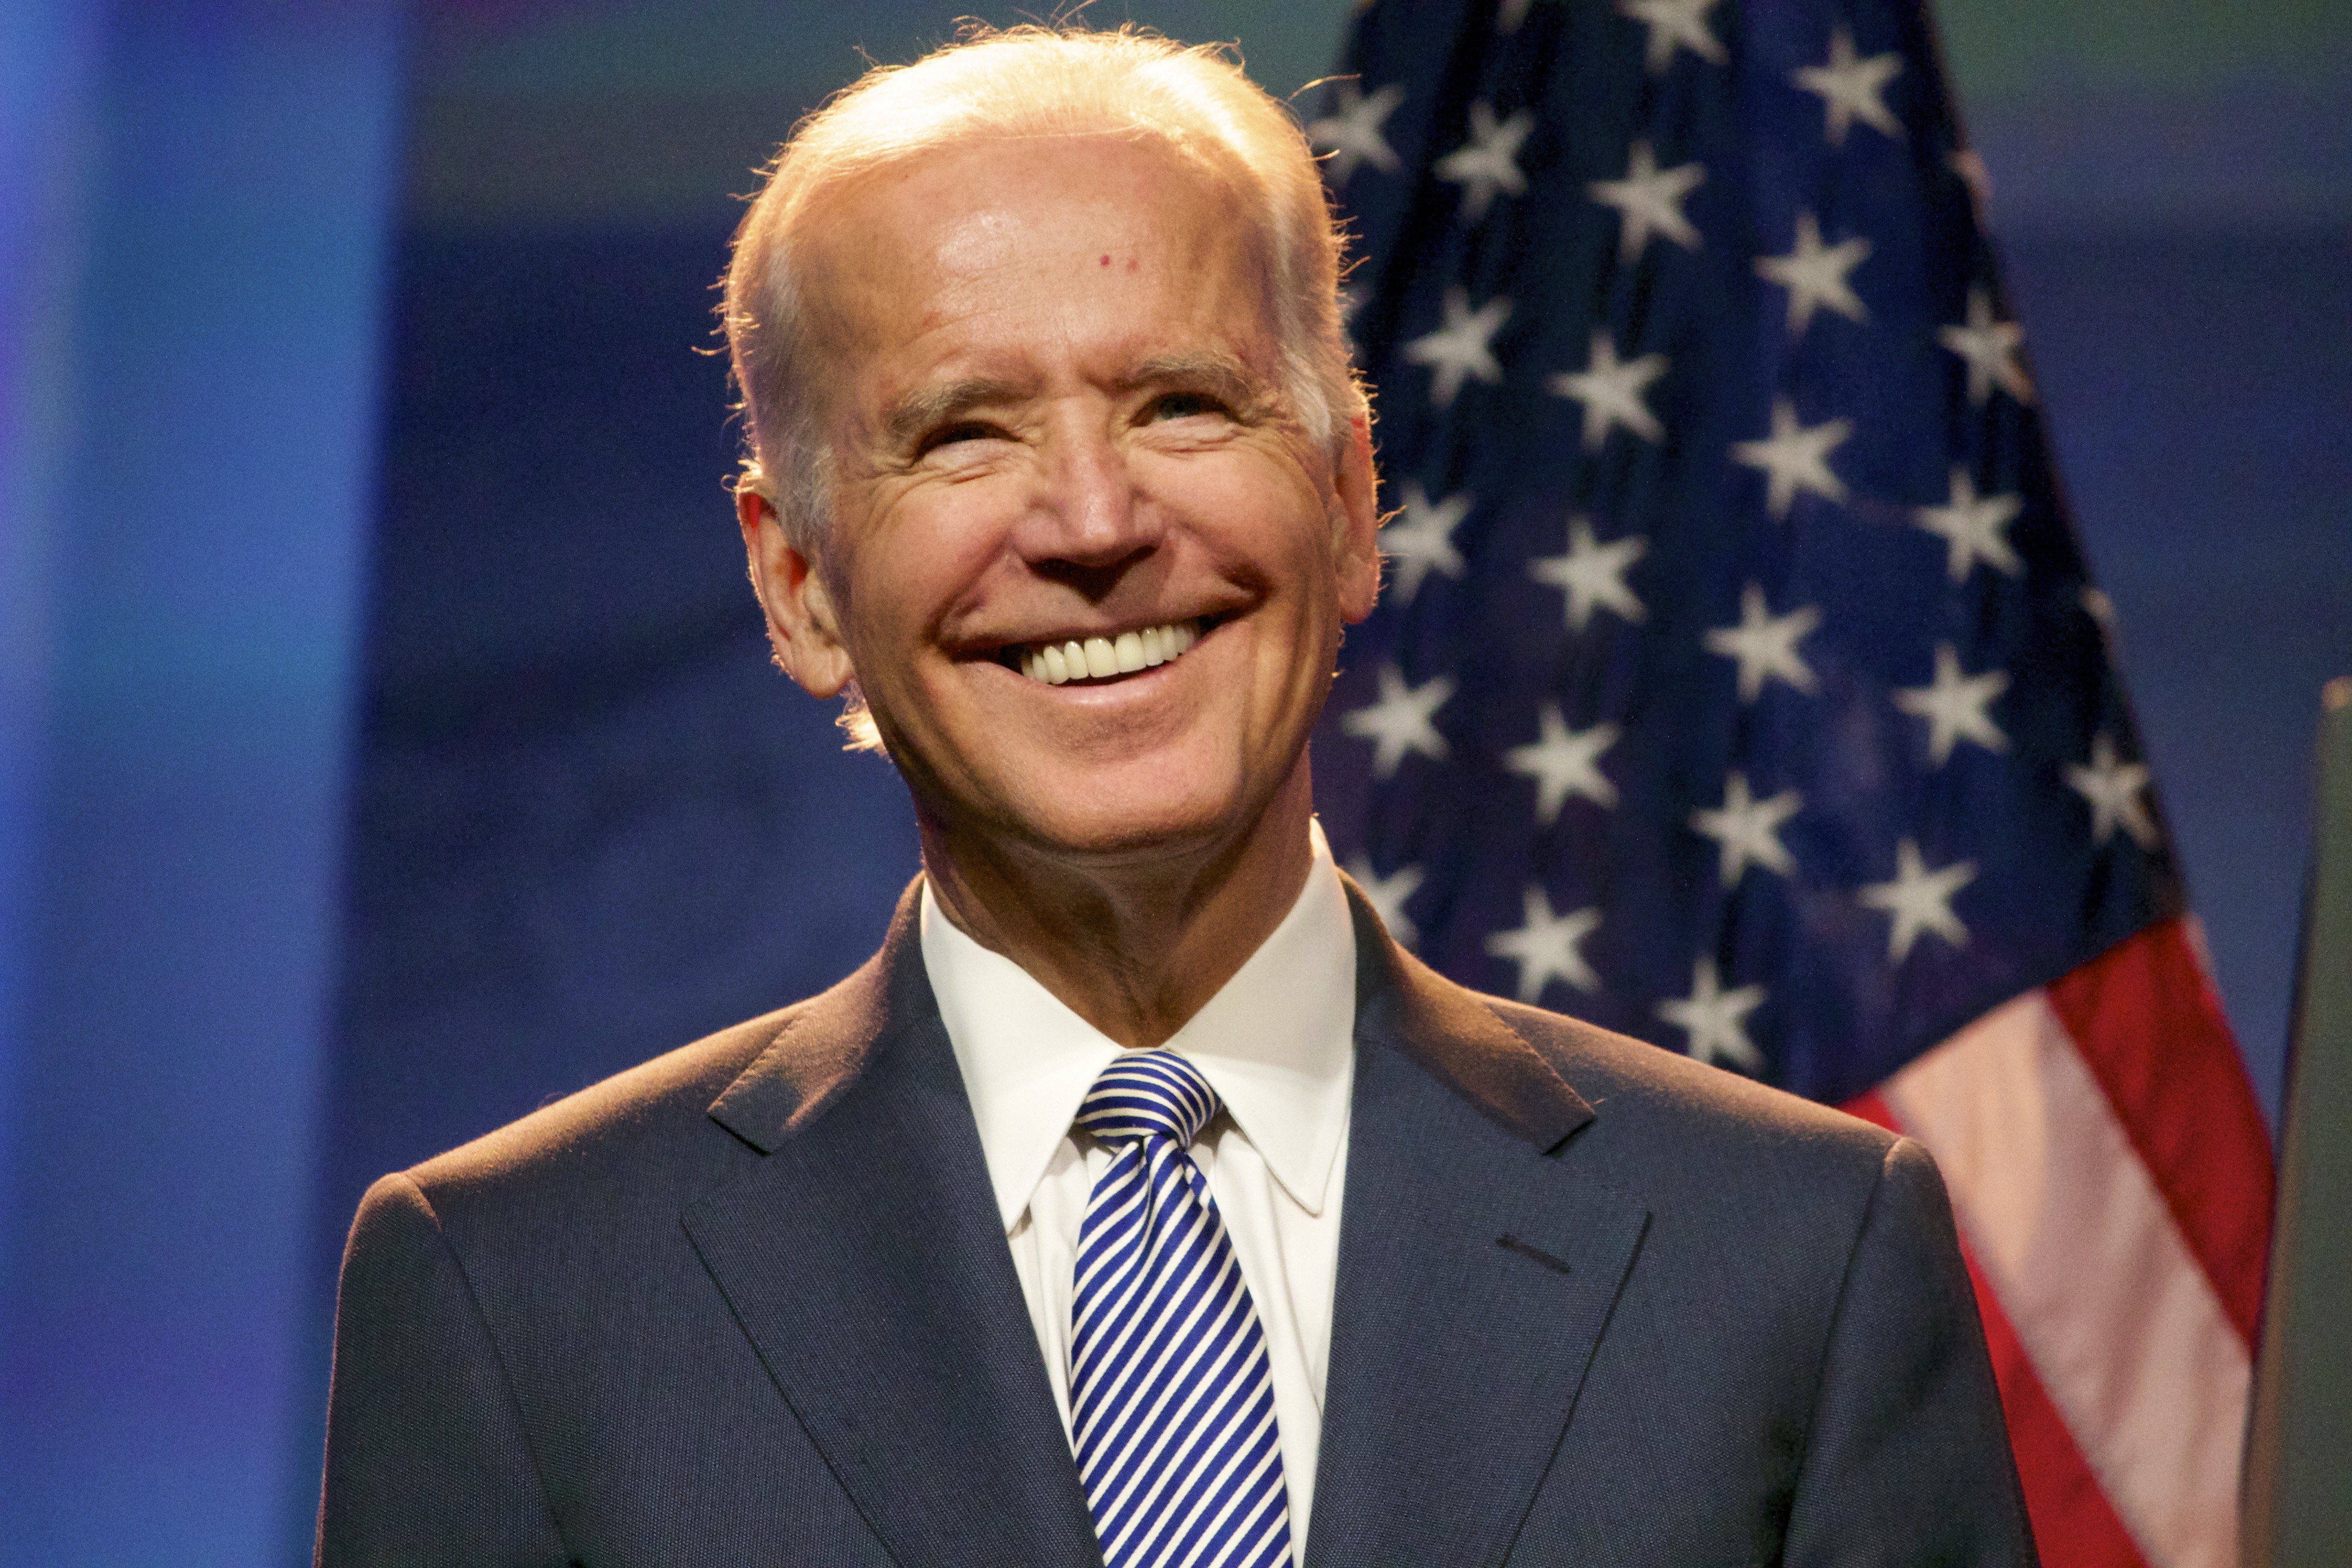 VIDEO: Former Vice President Joe Biden Addressed 87th Annual Mayor’s Conference